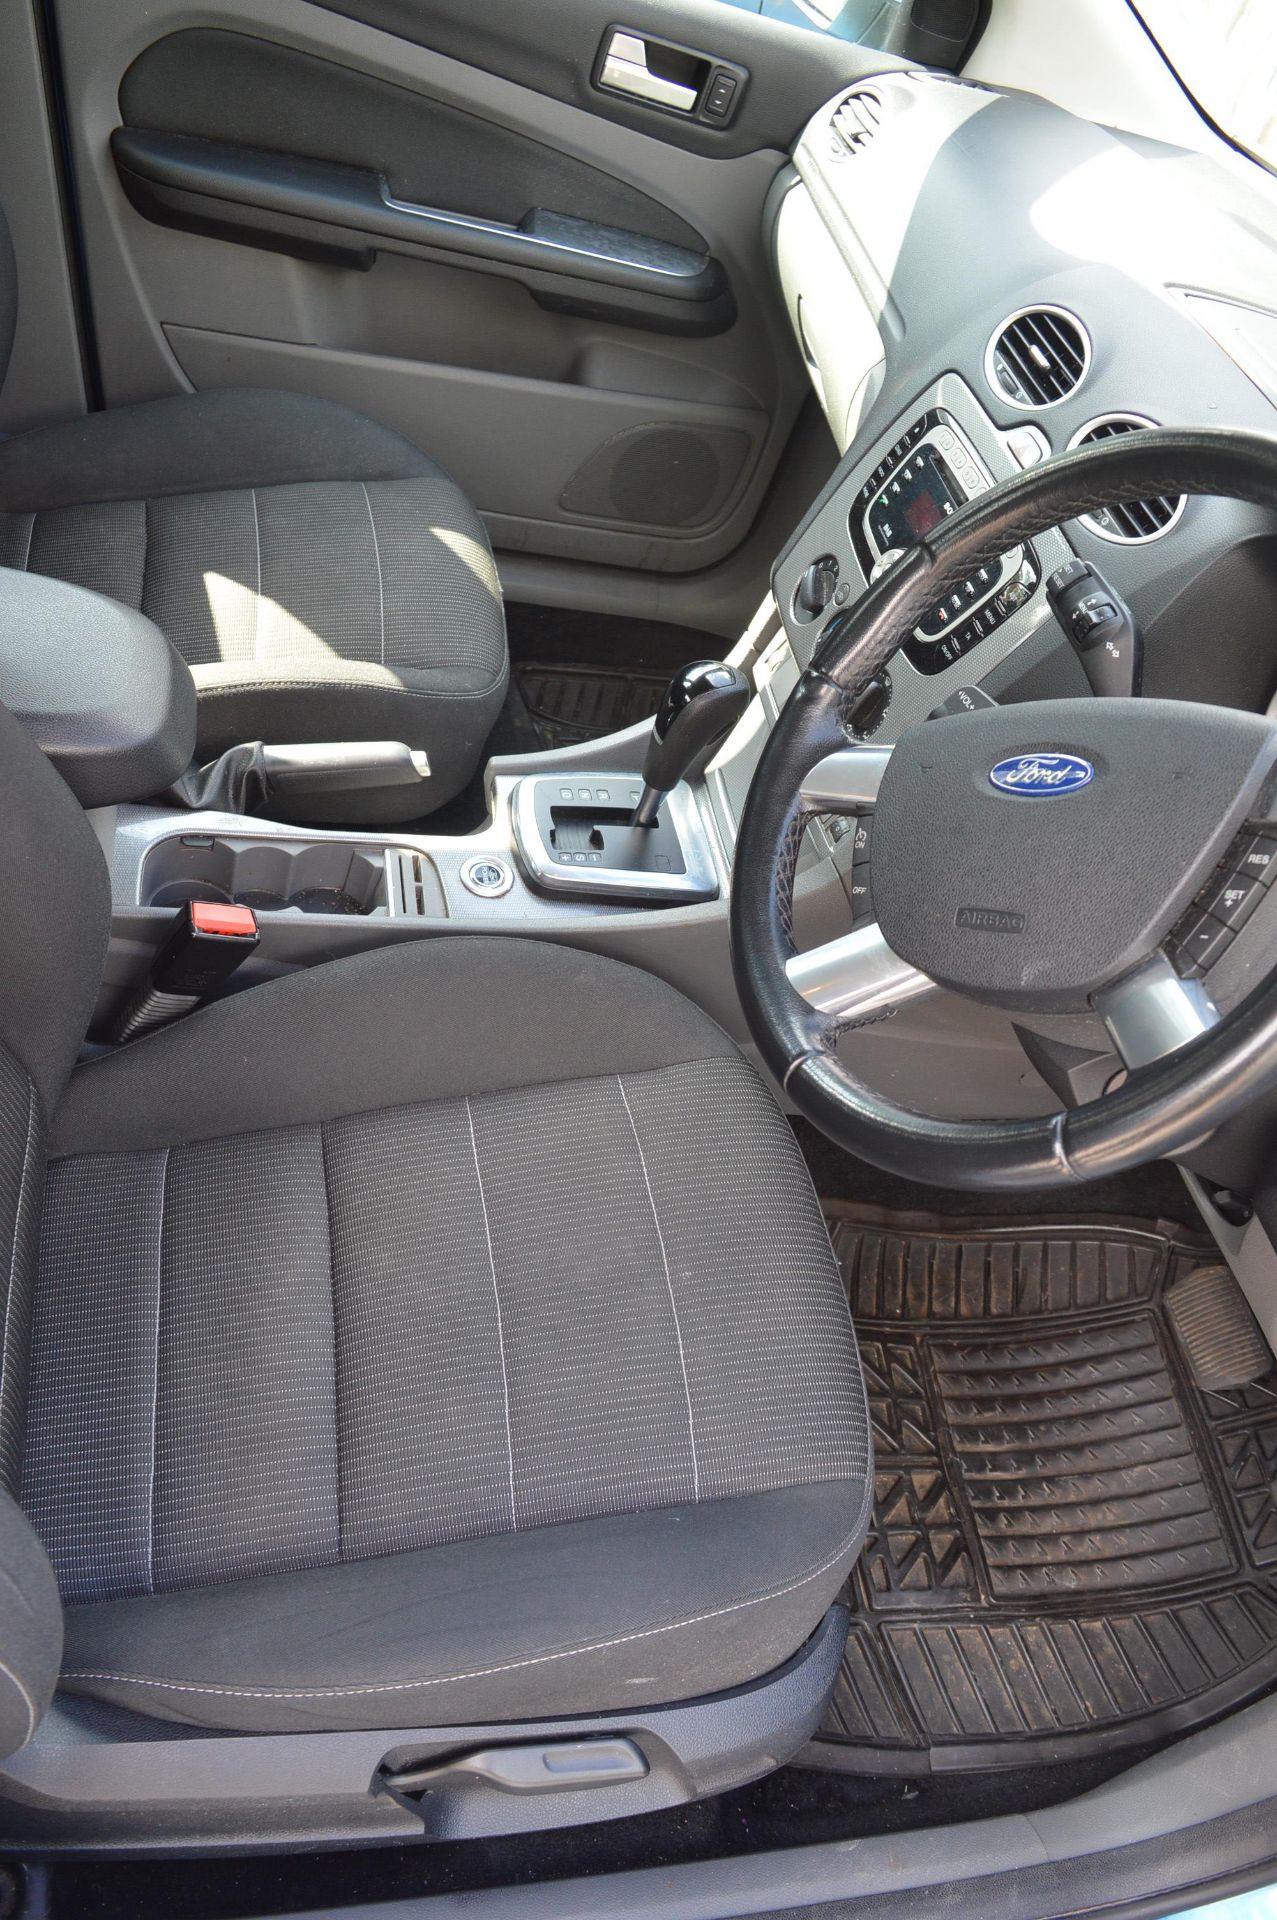 Ford Focus Titanium 1.6 Automatic Reg:LT10 LTZ, MOT: March 2020 with Full Service History - Bild 2 aus 3